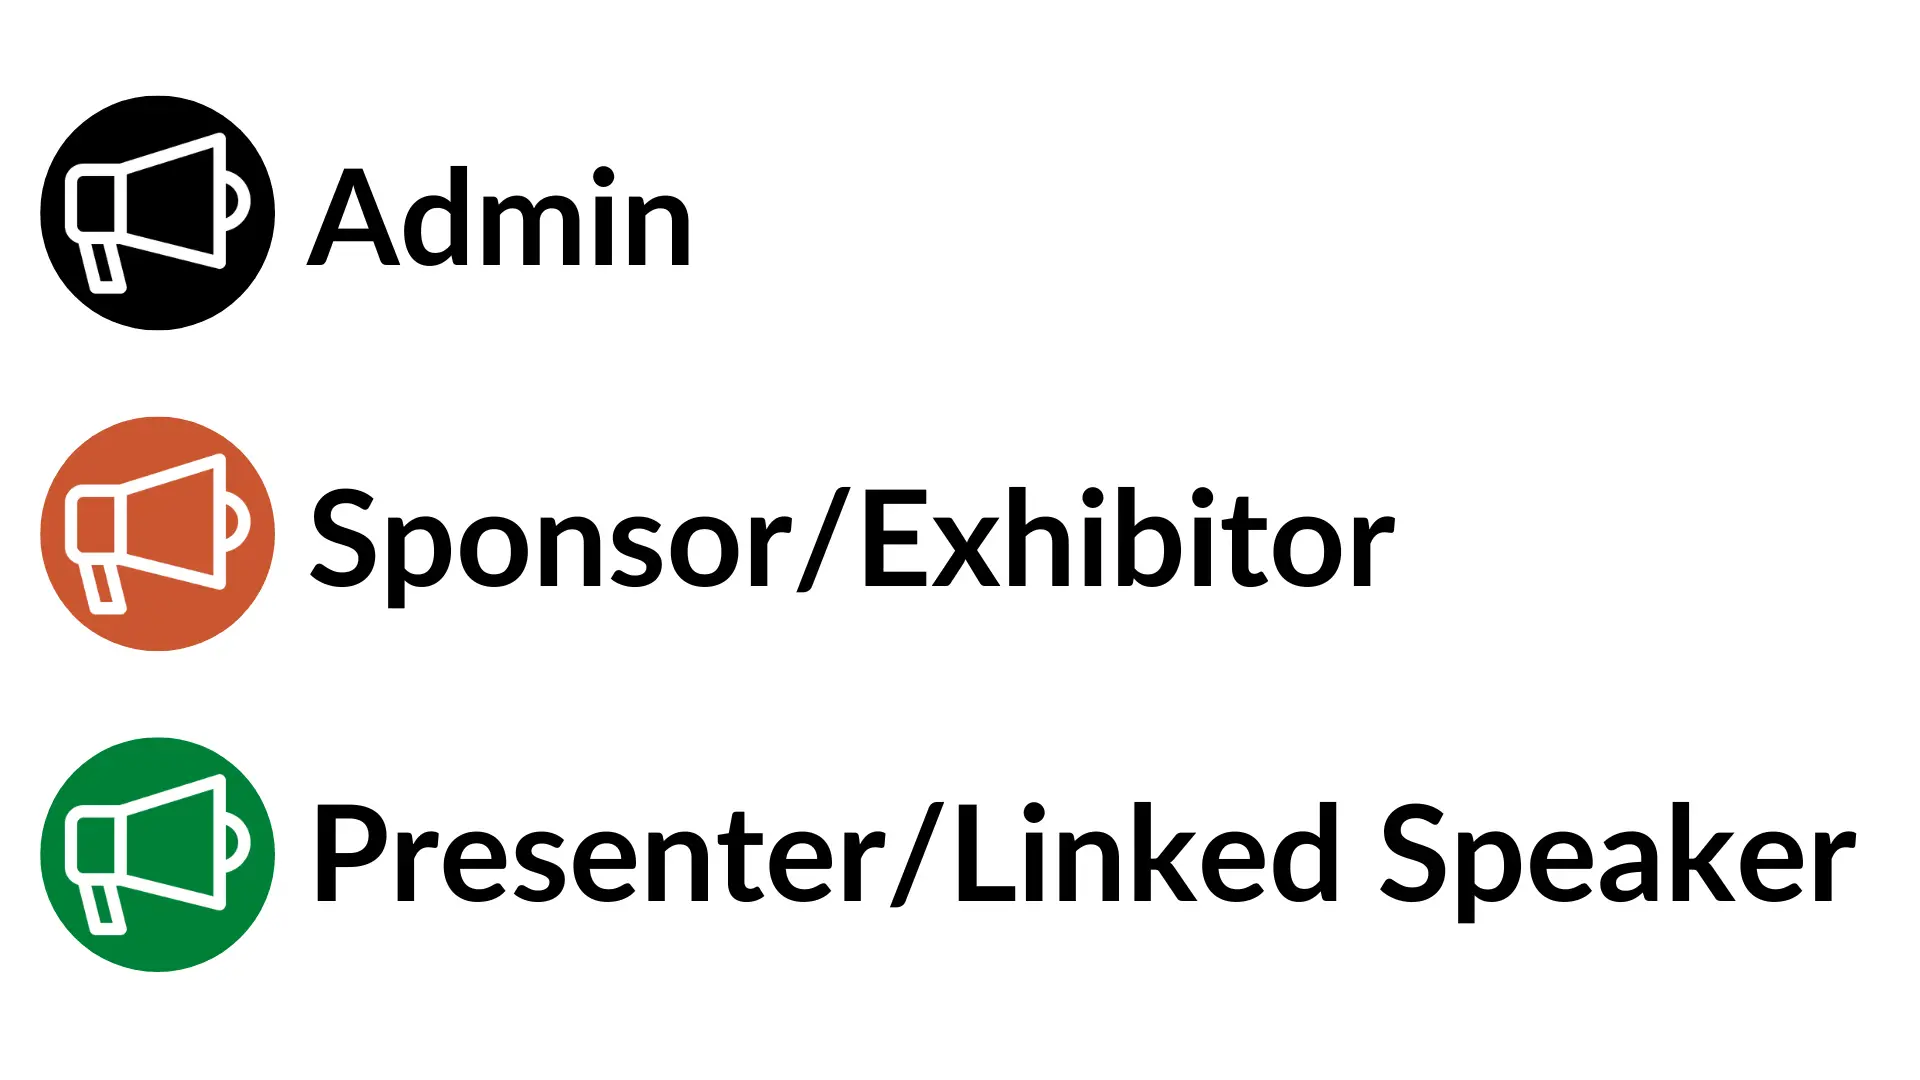 admins, presenters/linked speakers and sponsors/exhibitors